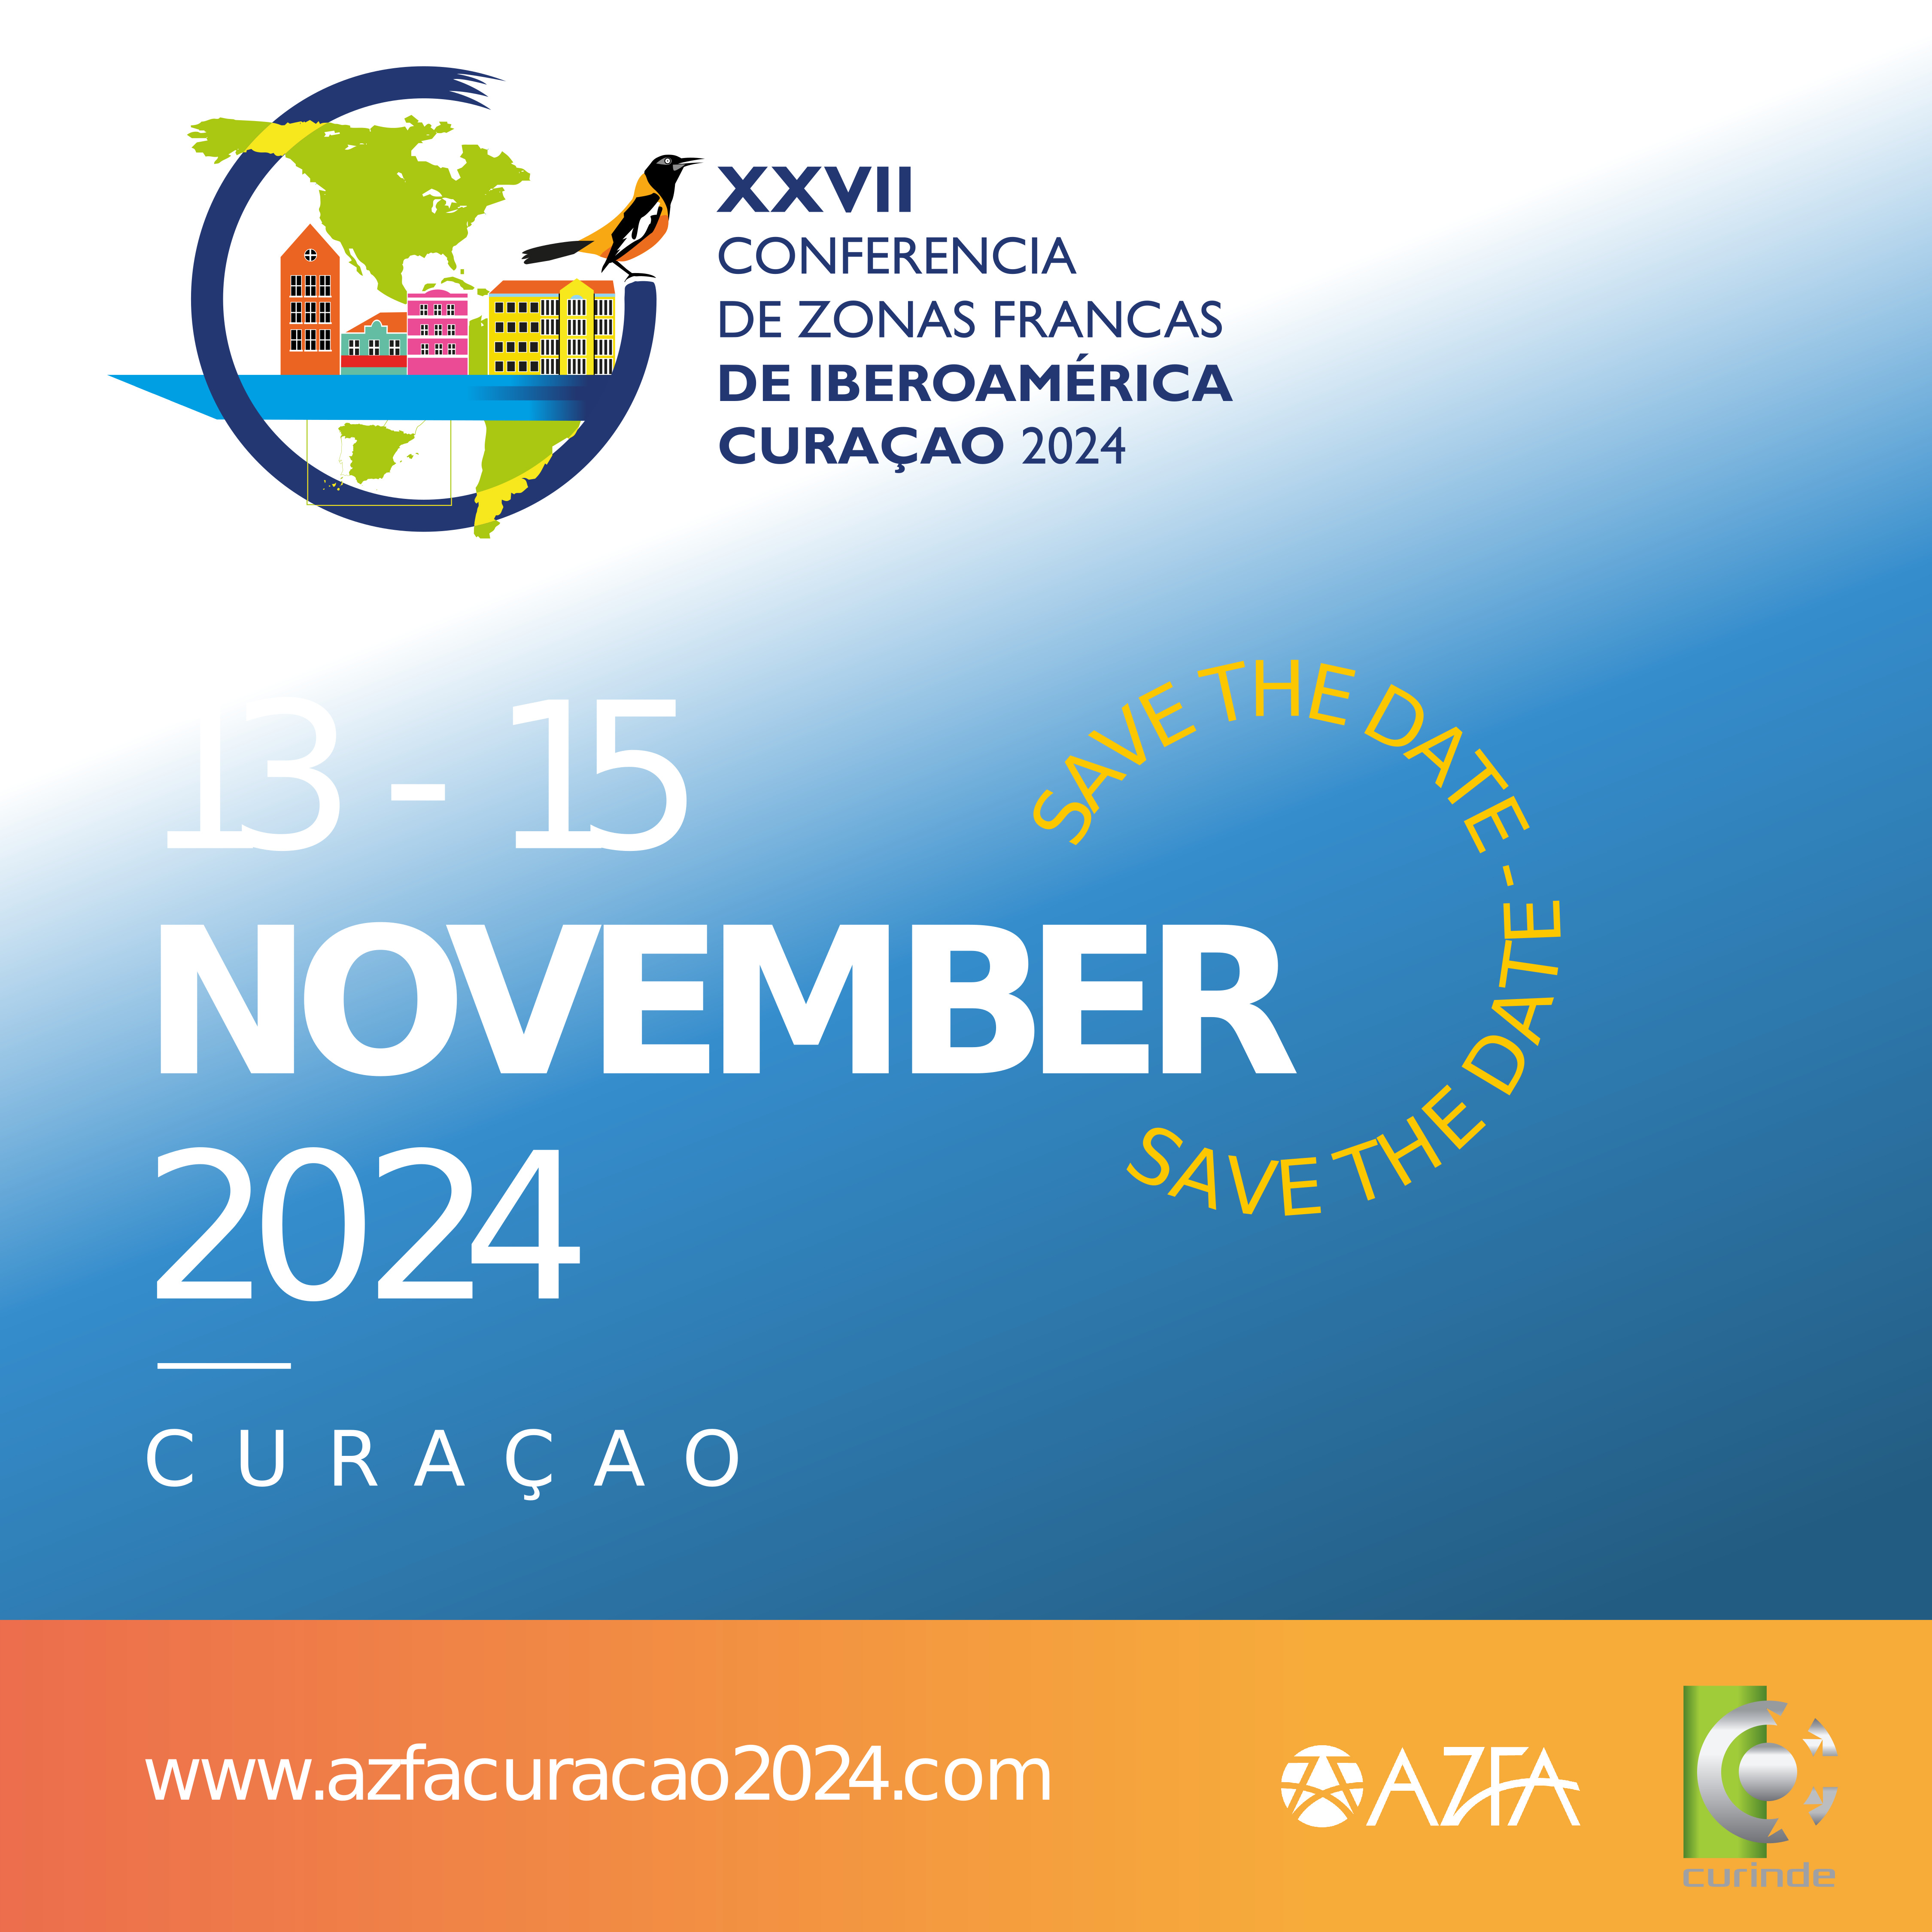 XXVII Conferencia de Zonas Francas de Iberoamérica